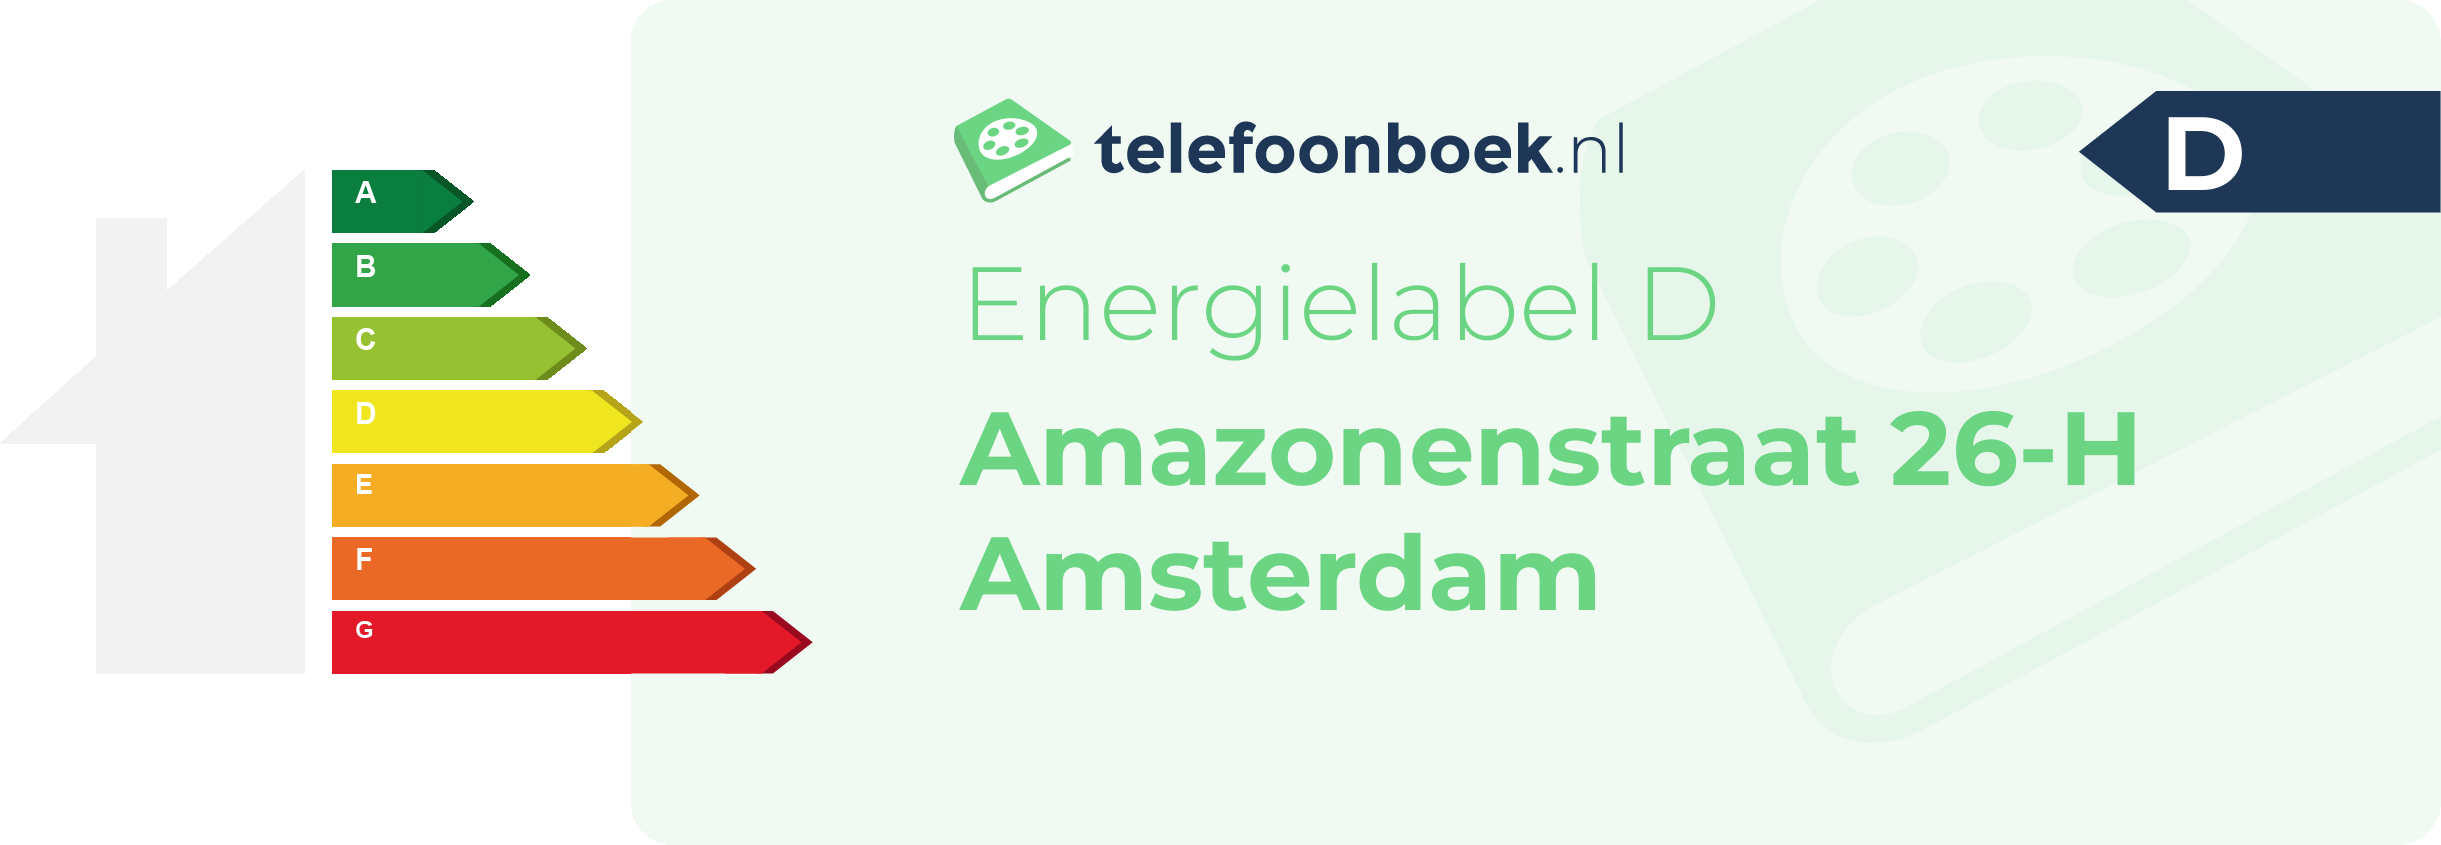 Energielabel Amazonenstraat 26-H Amsterdam